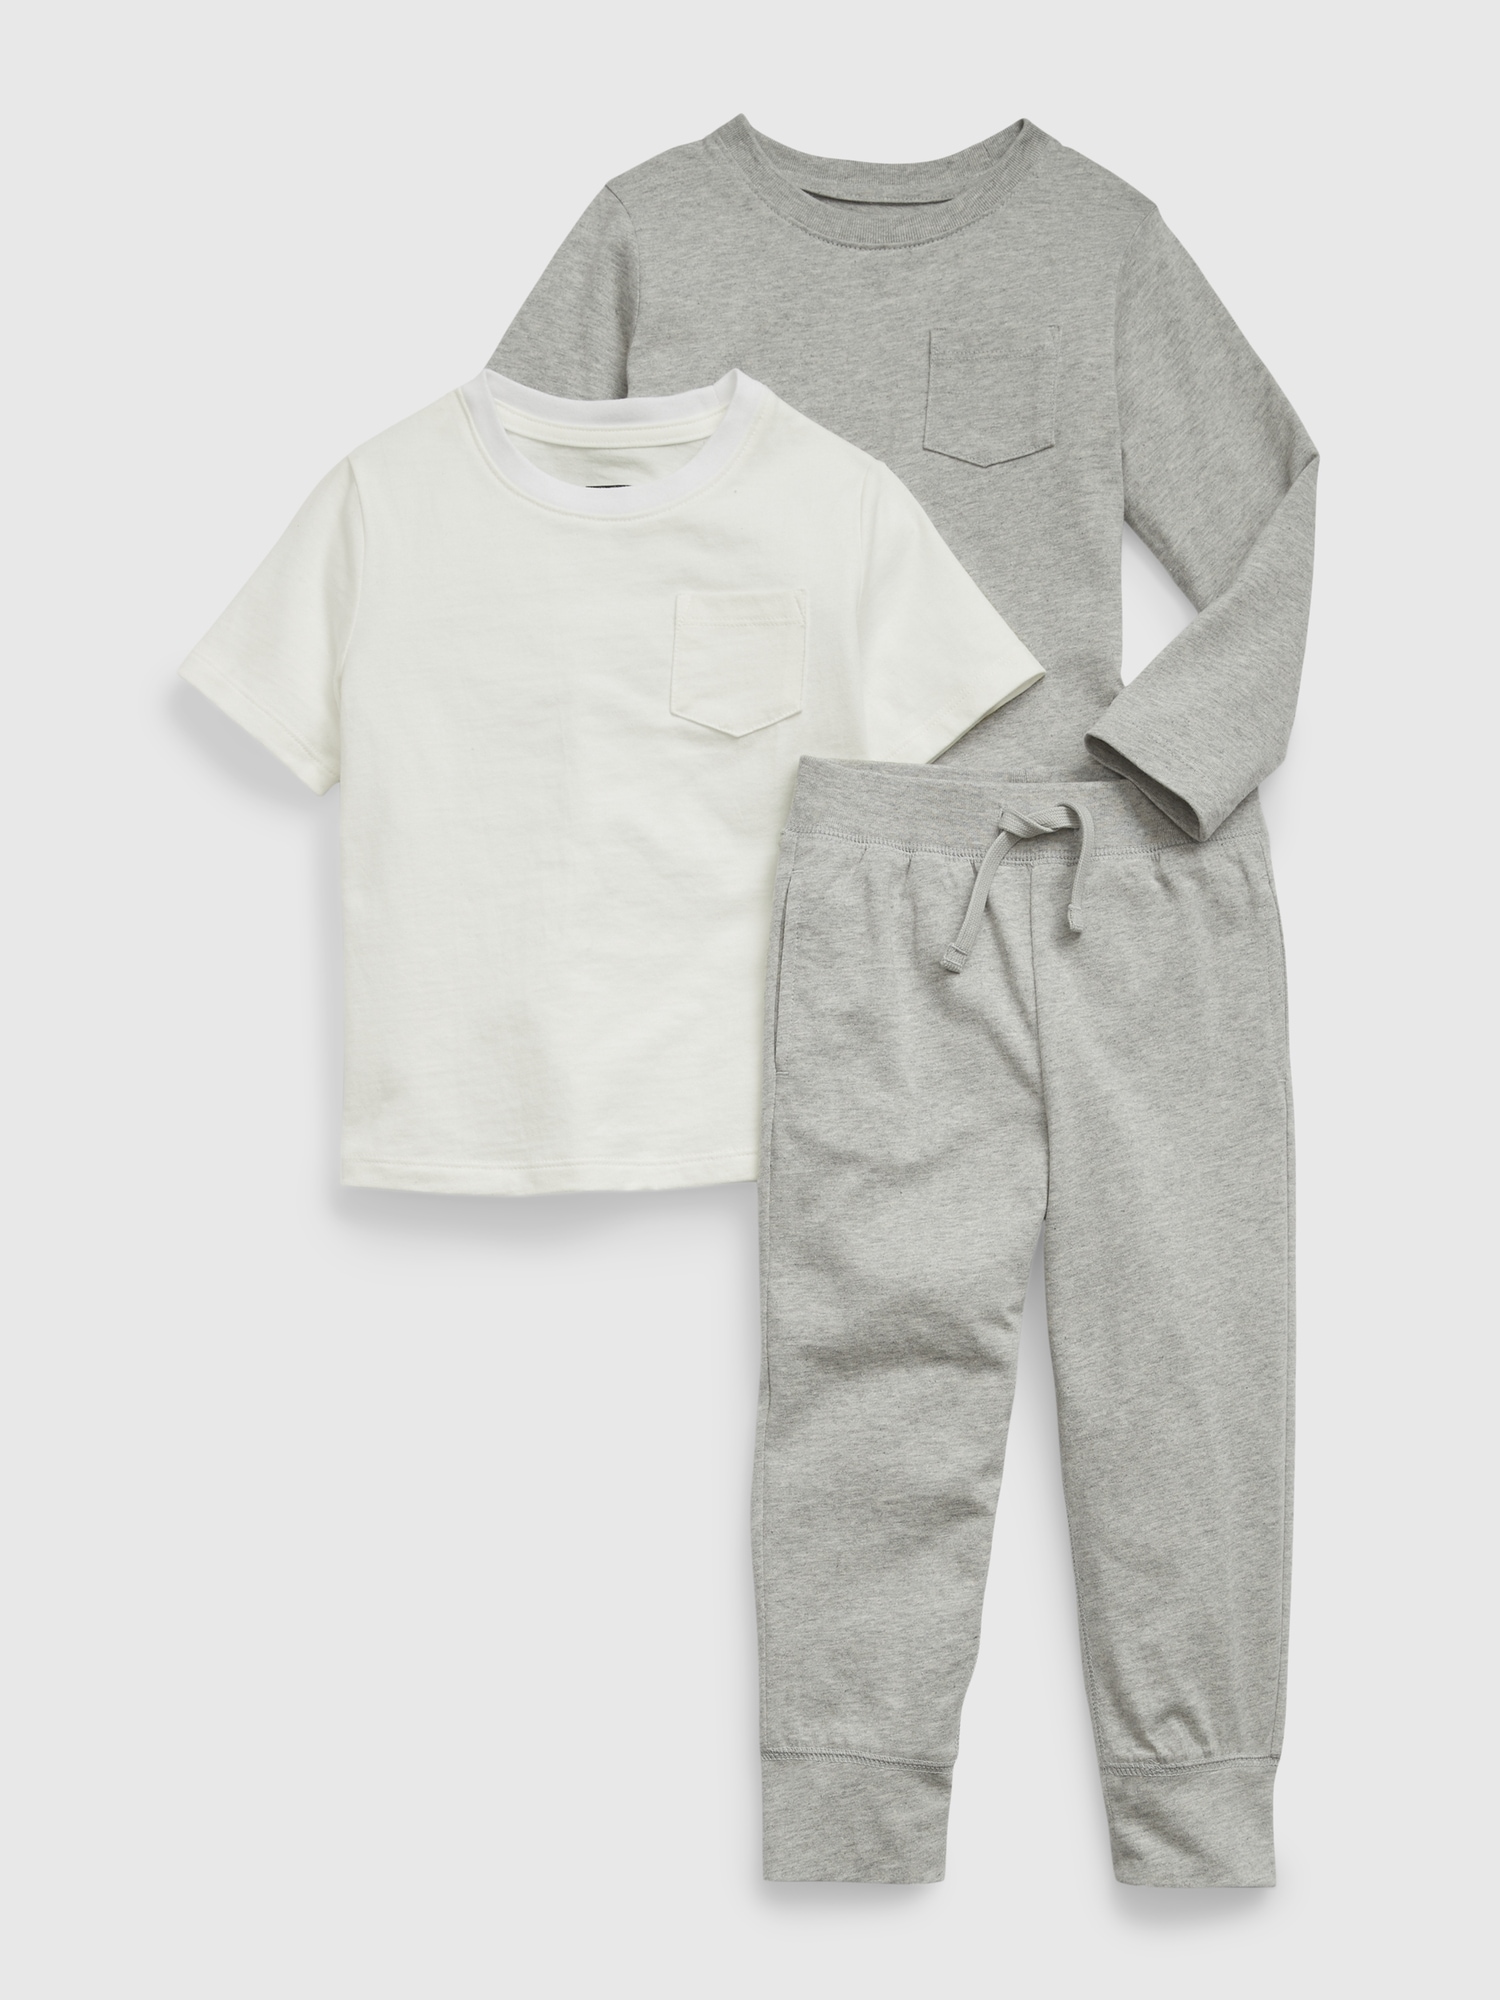 Gap Babies' Toddler Organic Cotton Mix And Match Outfit Set In Light Grey